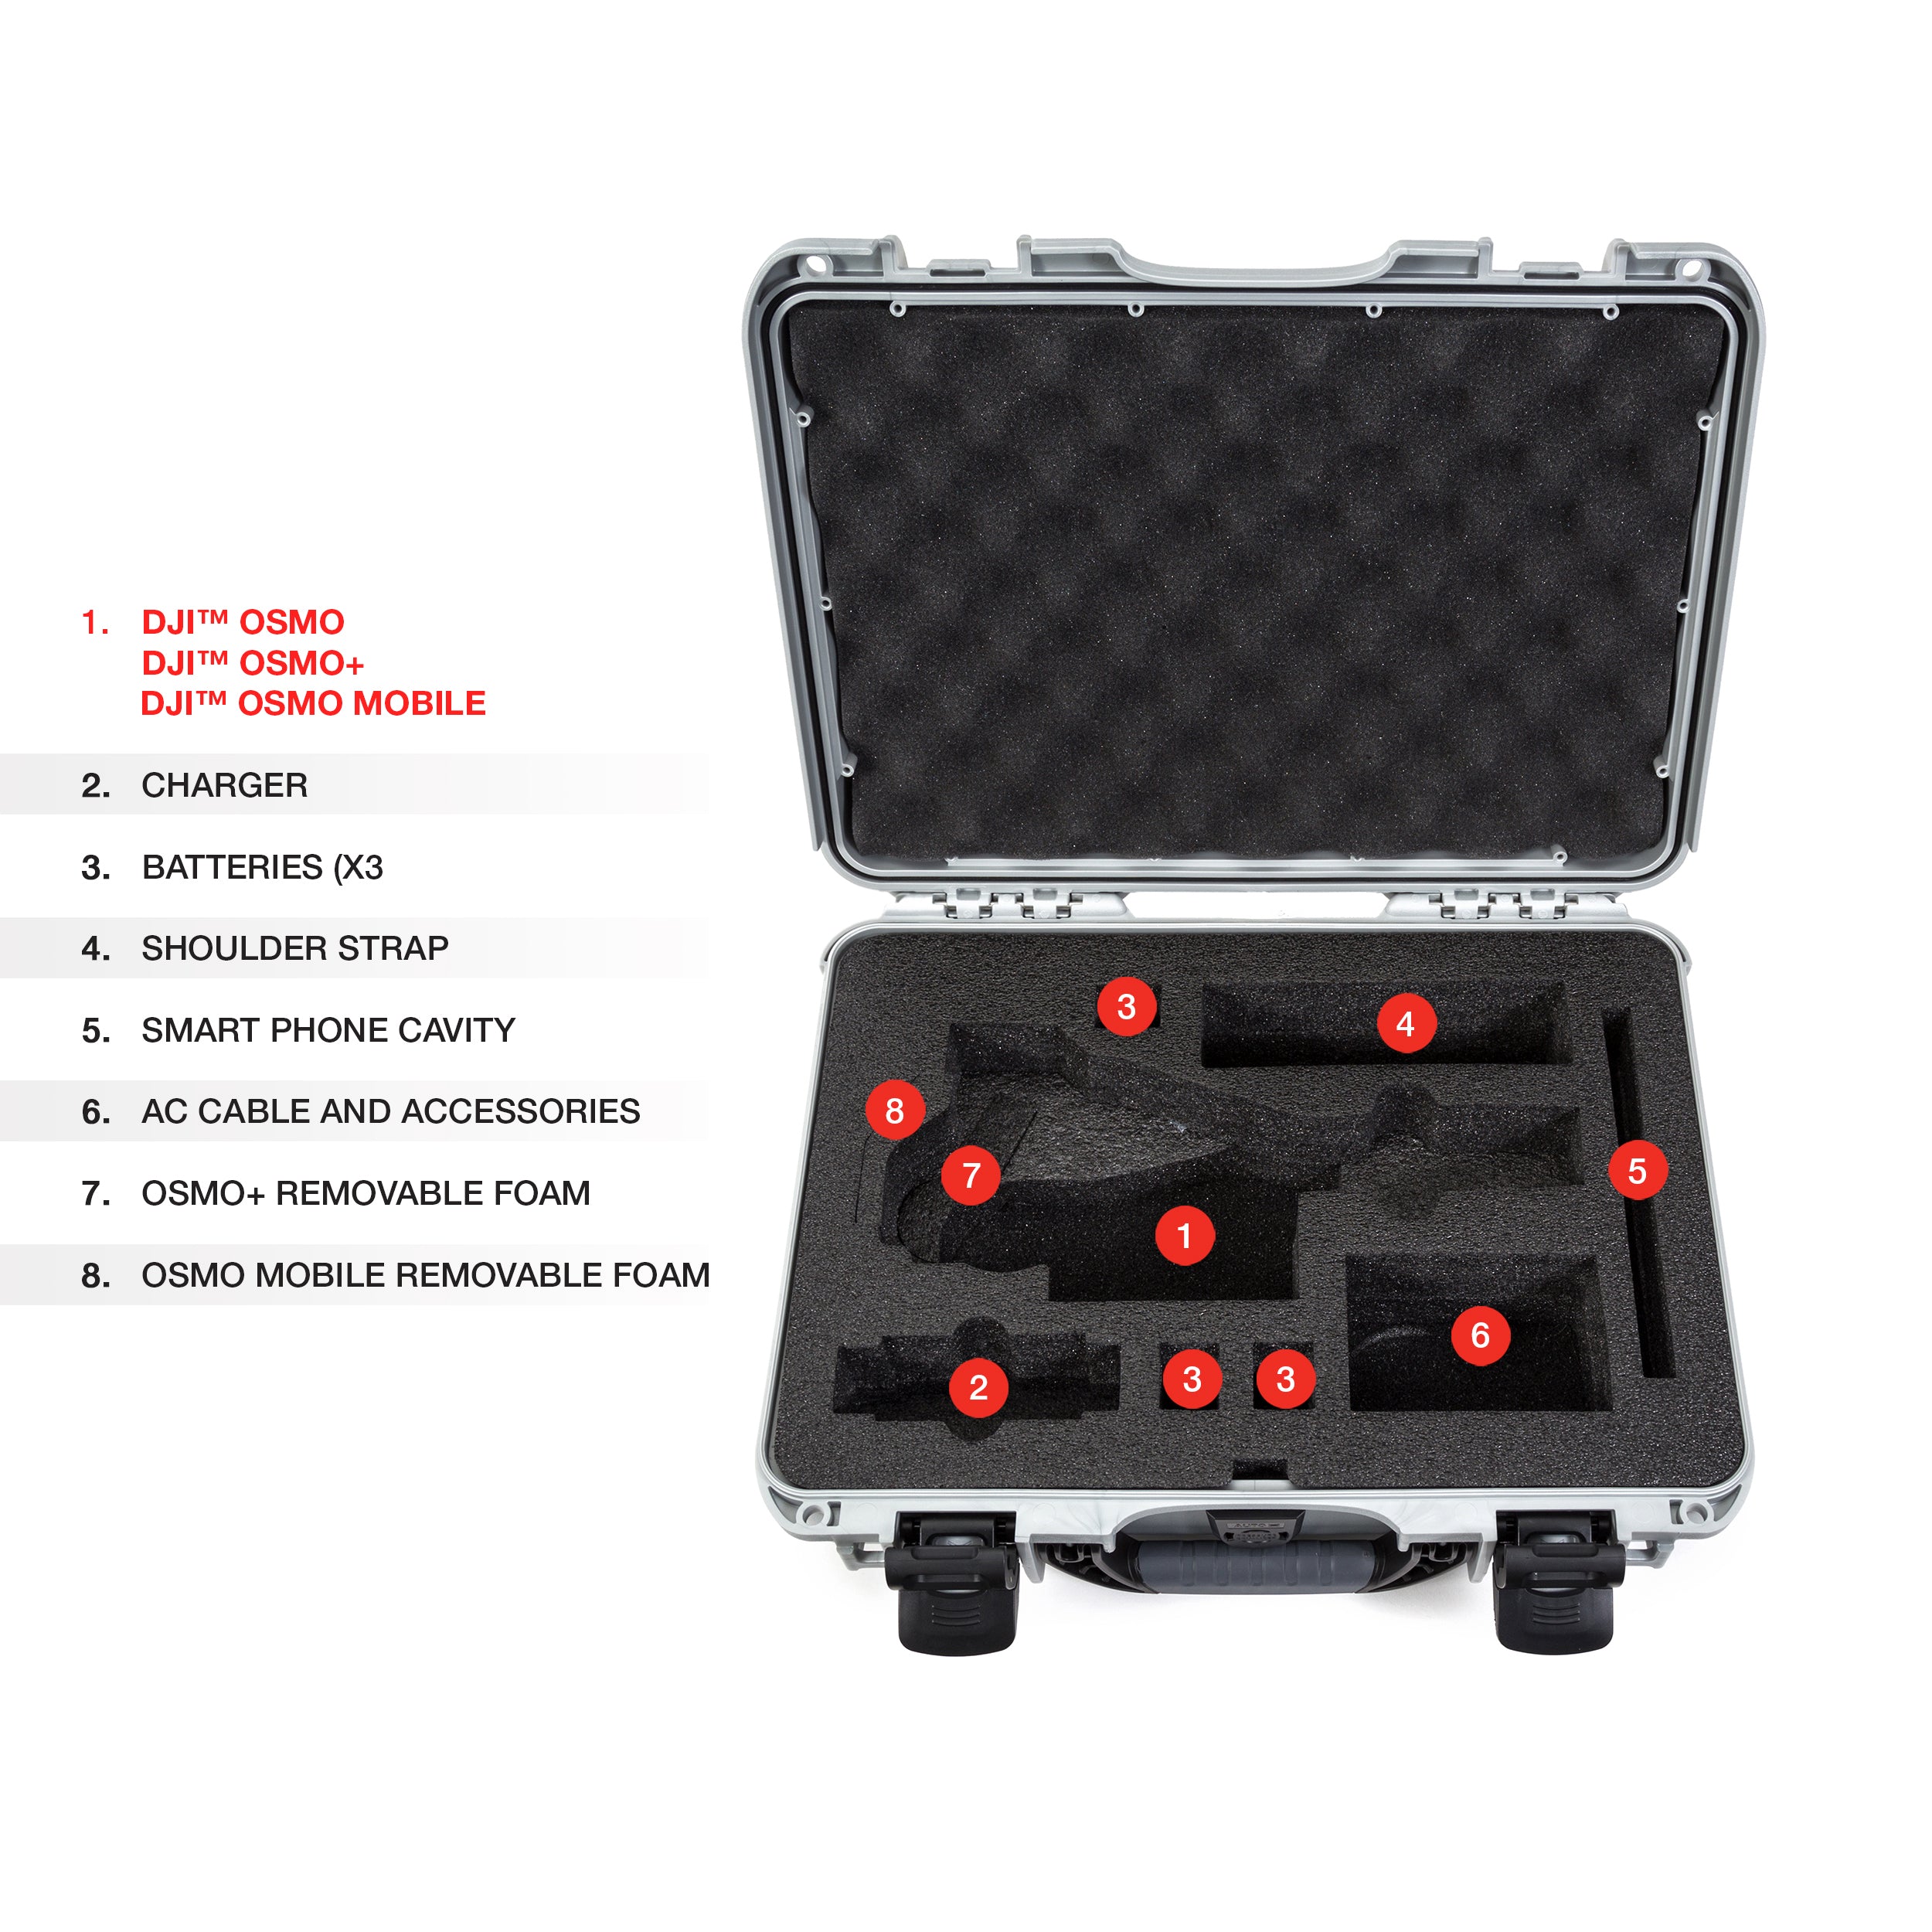 nanuk 909 waterproof hard case with custom insert for dji mavic mini graphite